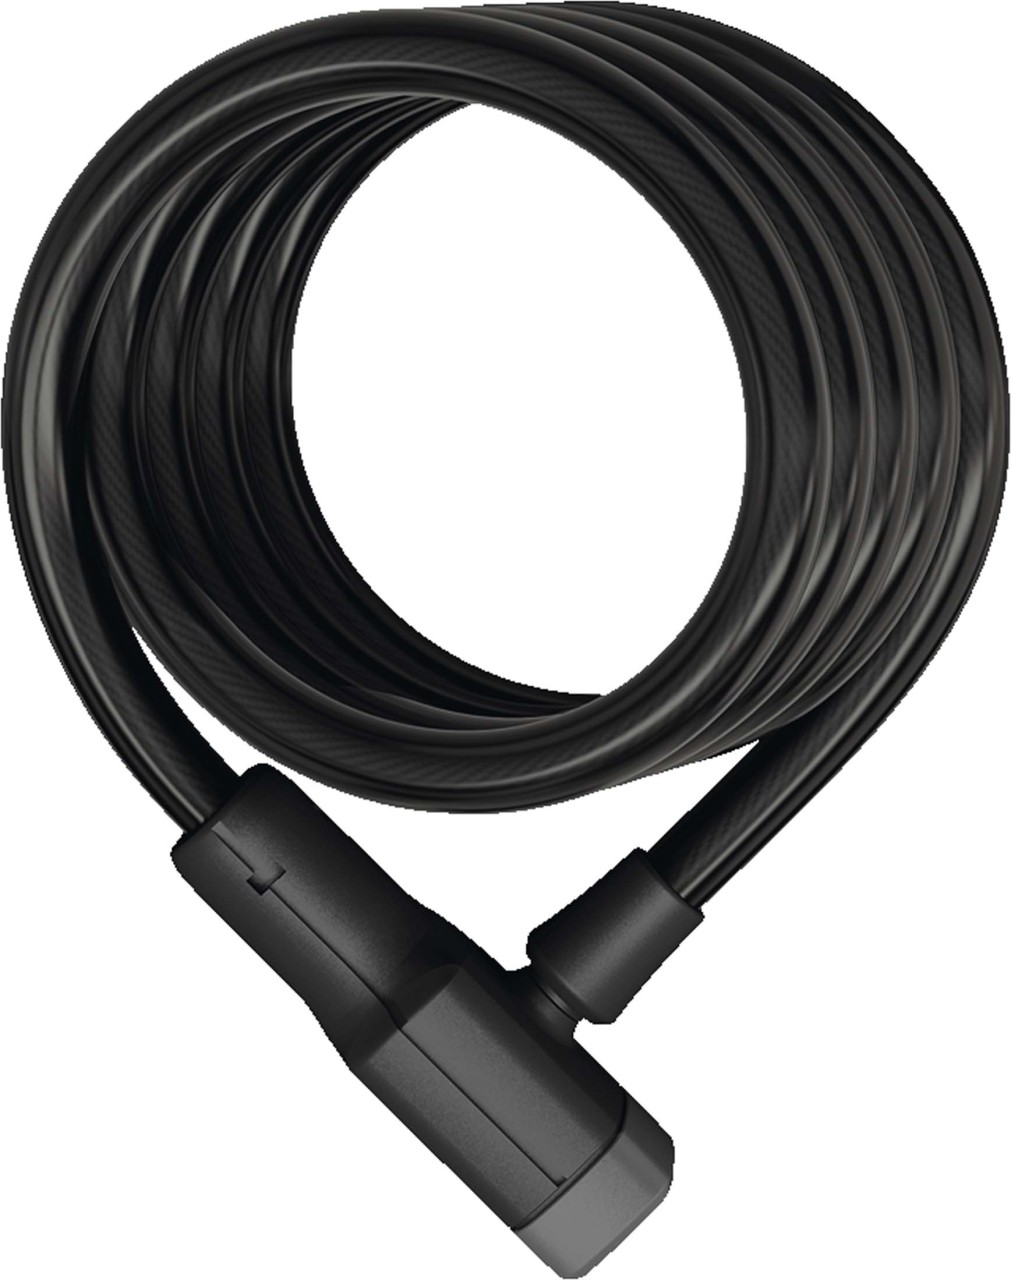 Abus Spiral cable lock Booster 6512K/180 black SR